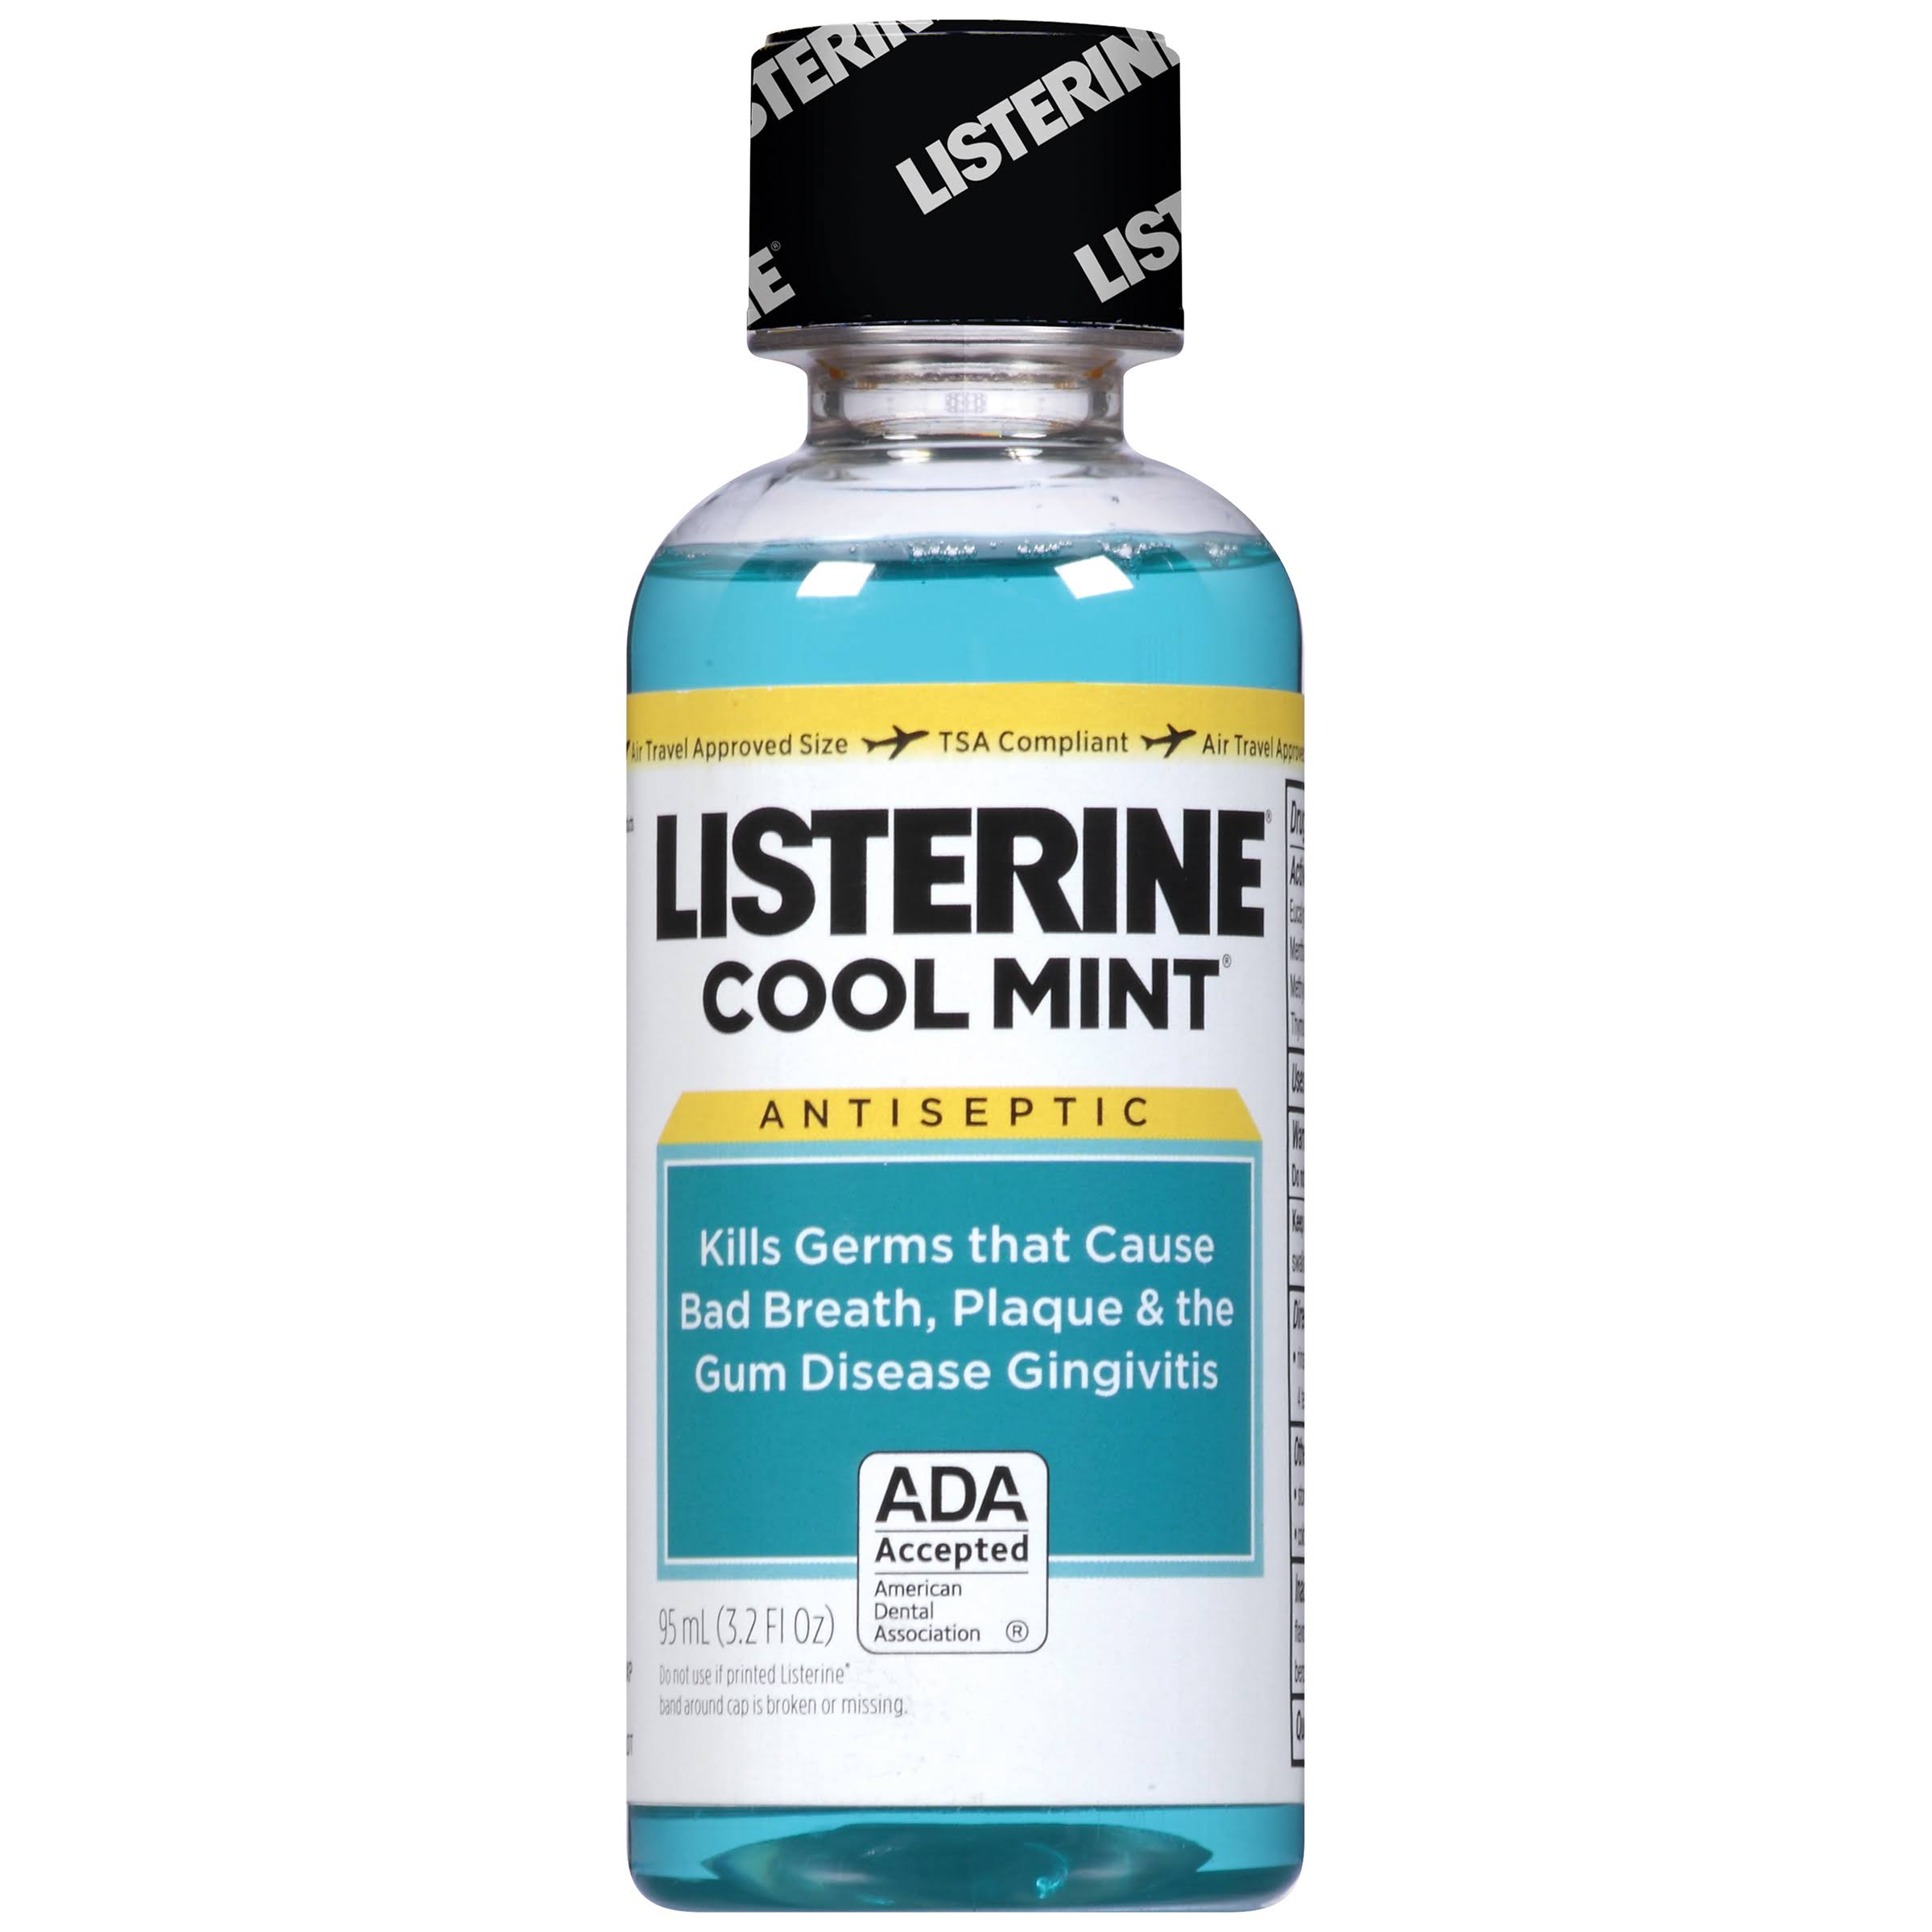 Listerine Antiseptic Adult Mouthwash - Cool Mint, 3.2 fl oz